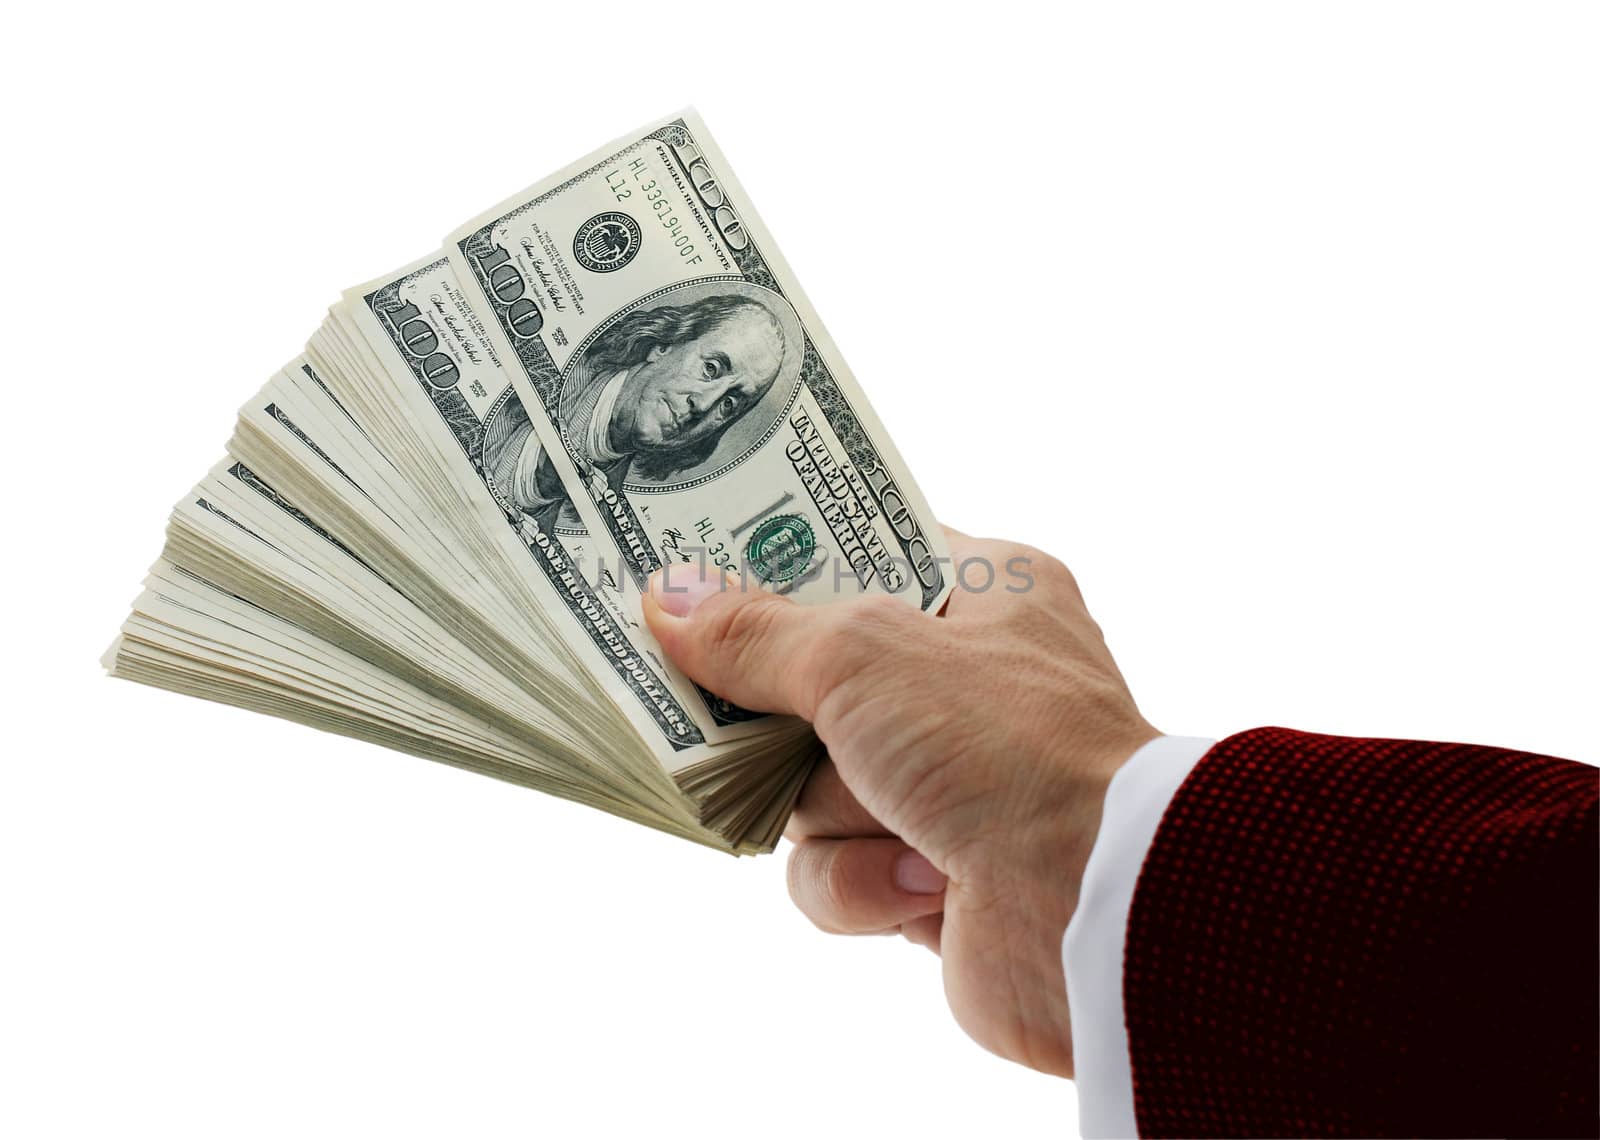 hand of businessman holding fan-shaped dollars